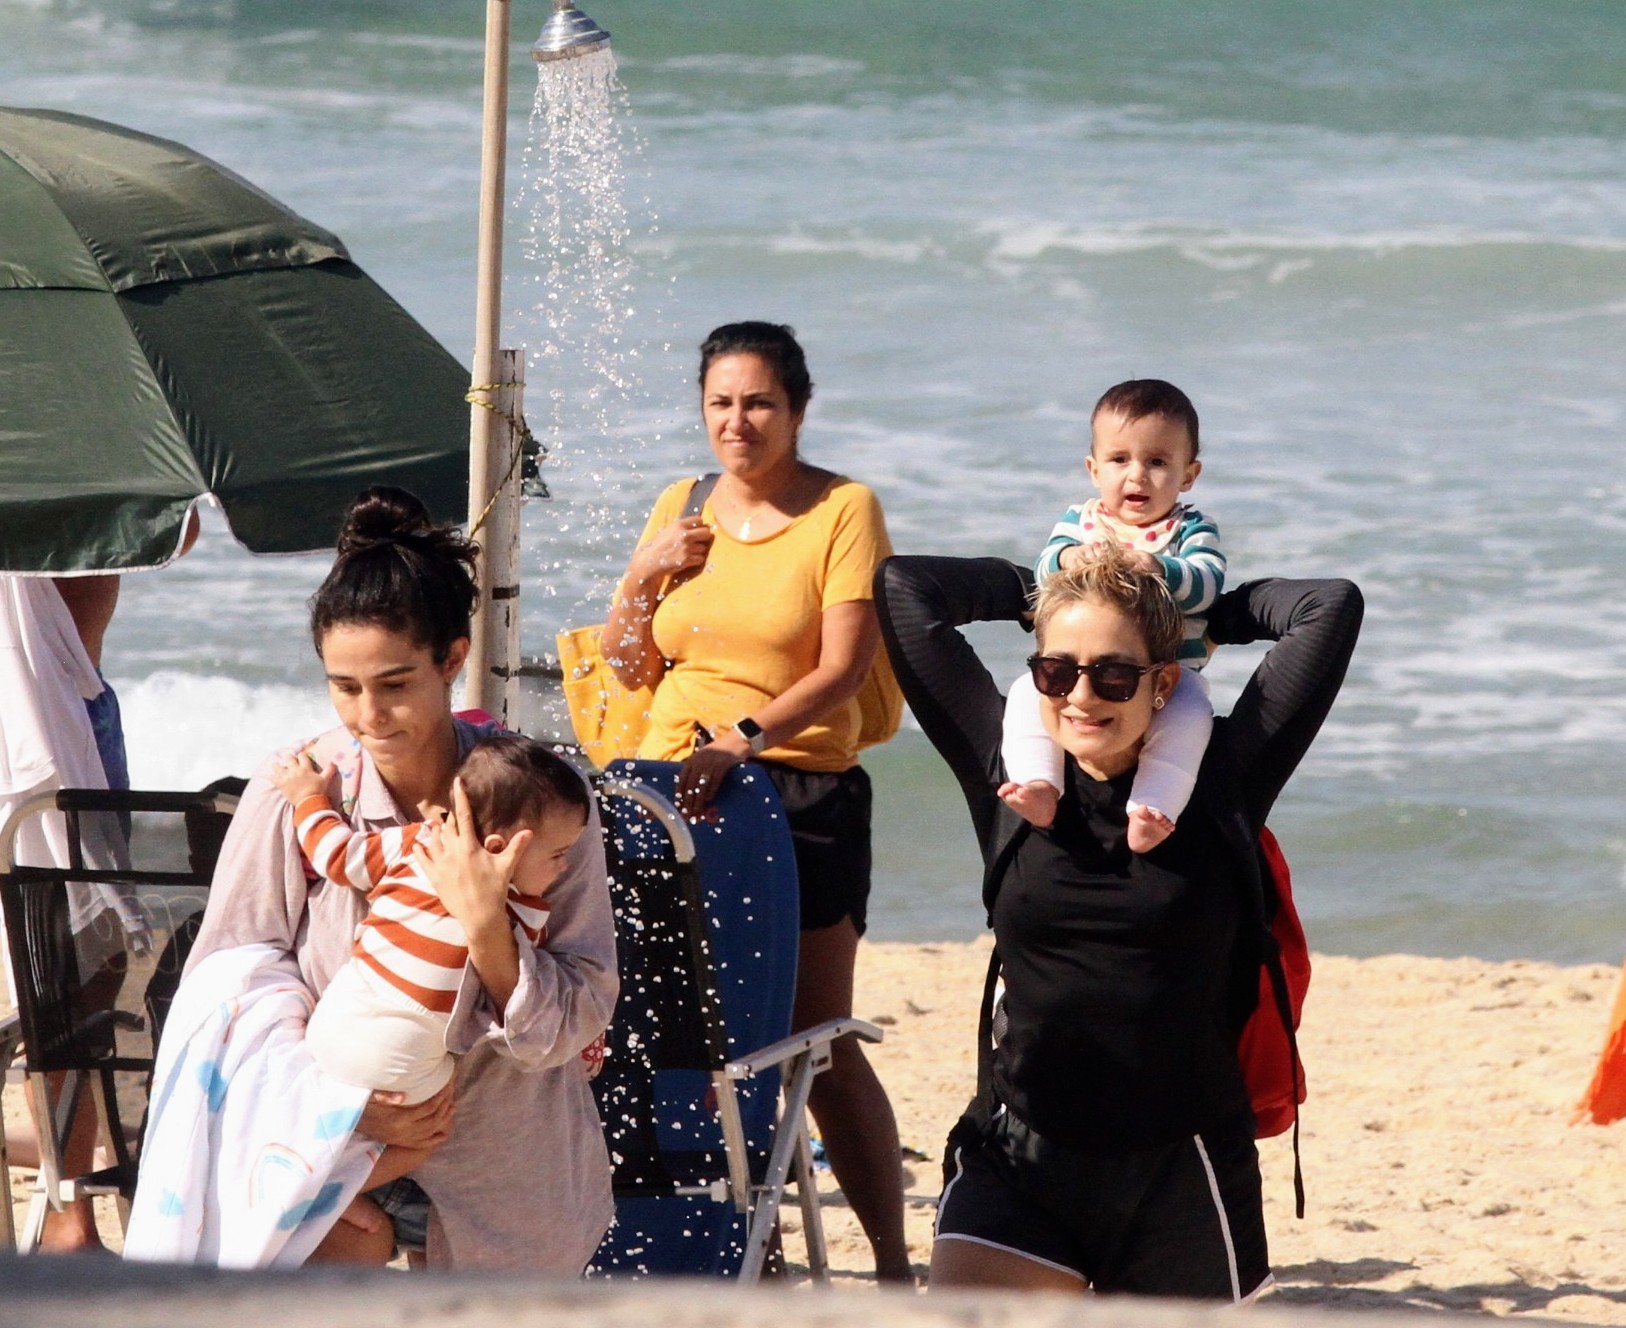 Nanda Costa e Lan Lanh curtem praia com as filhas (Foto: AgNews / Daniel Delmiro)